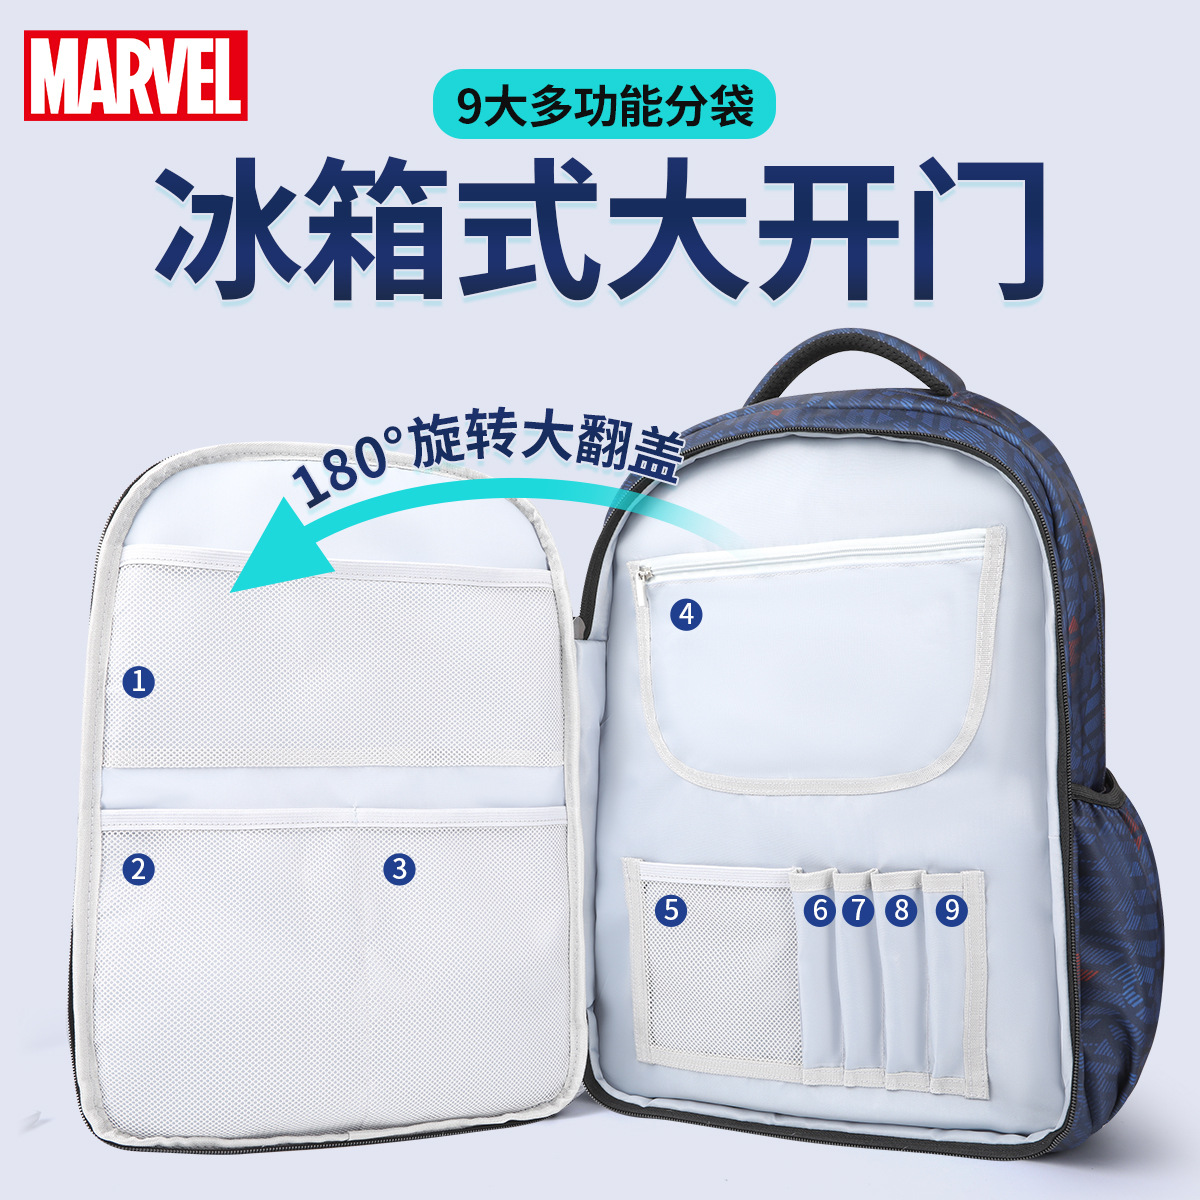 Disney Marvel Children's Schoolbag Refrigerator-Style Open Cover Multi-Layered Large Capacity Primary School Student Grade 3-6 Schoolbag